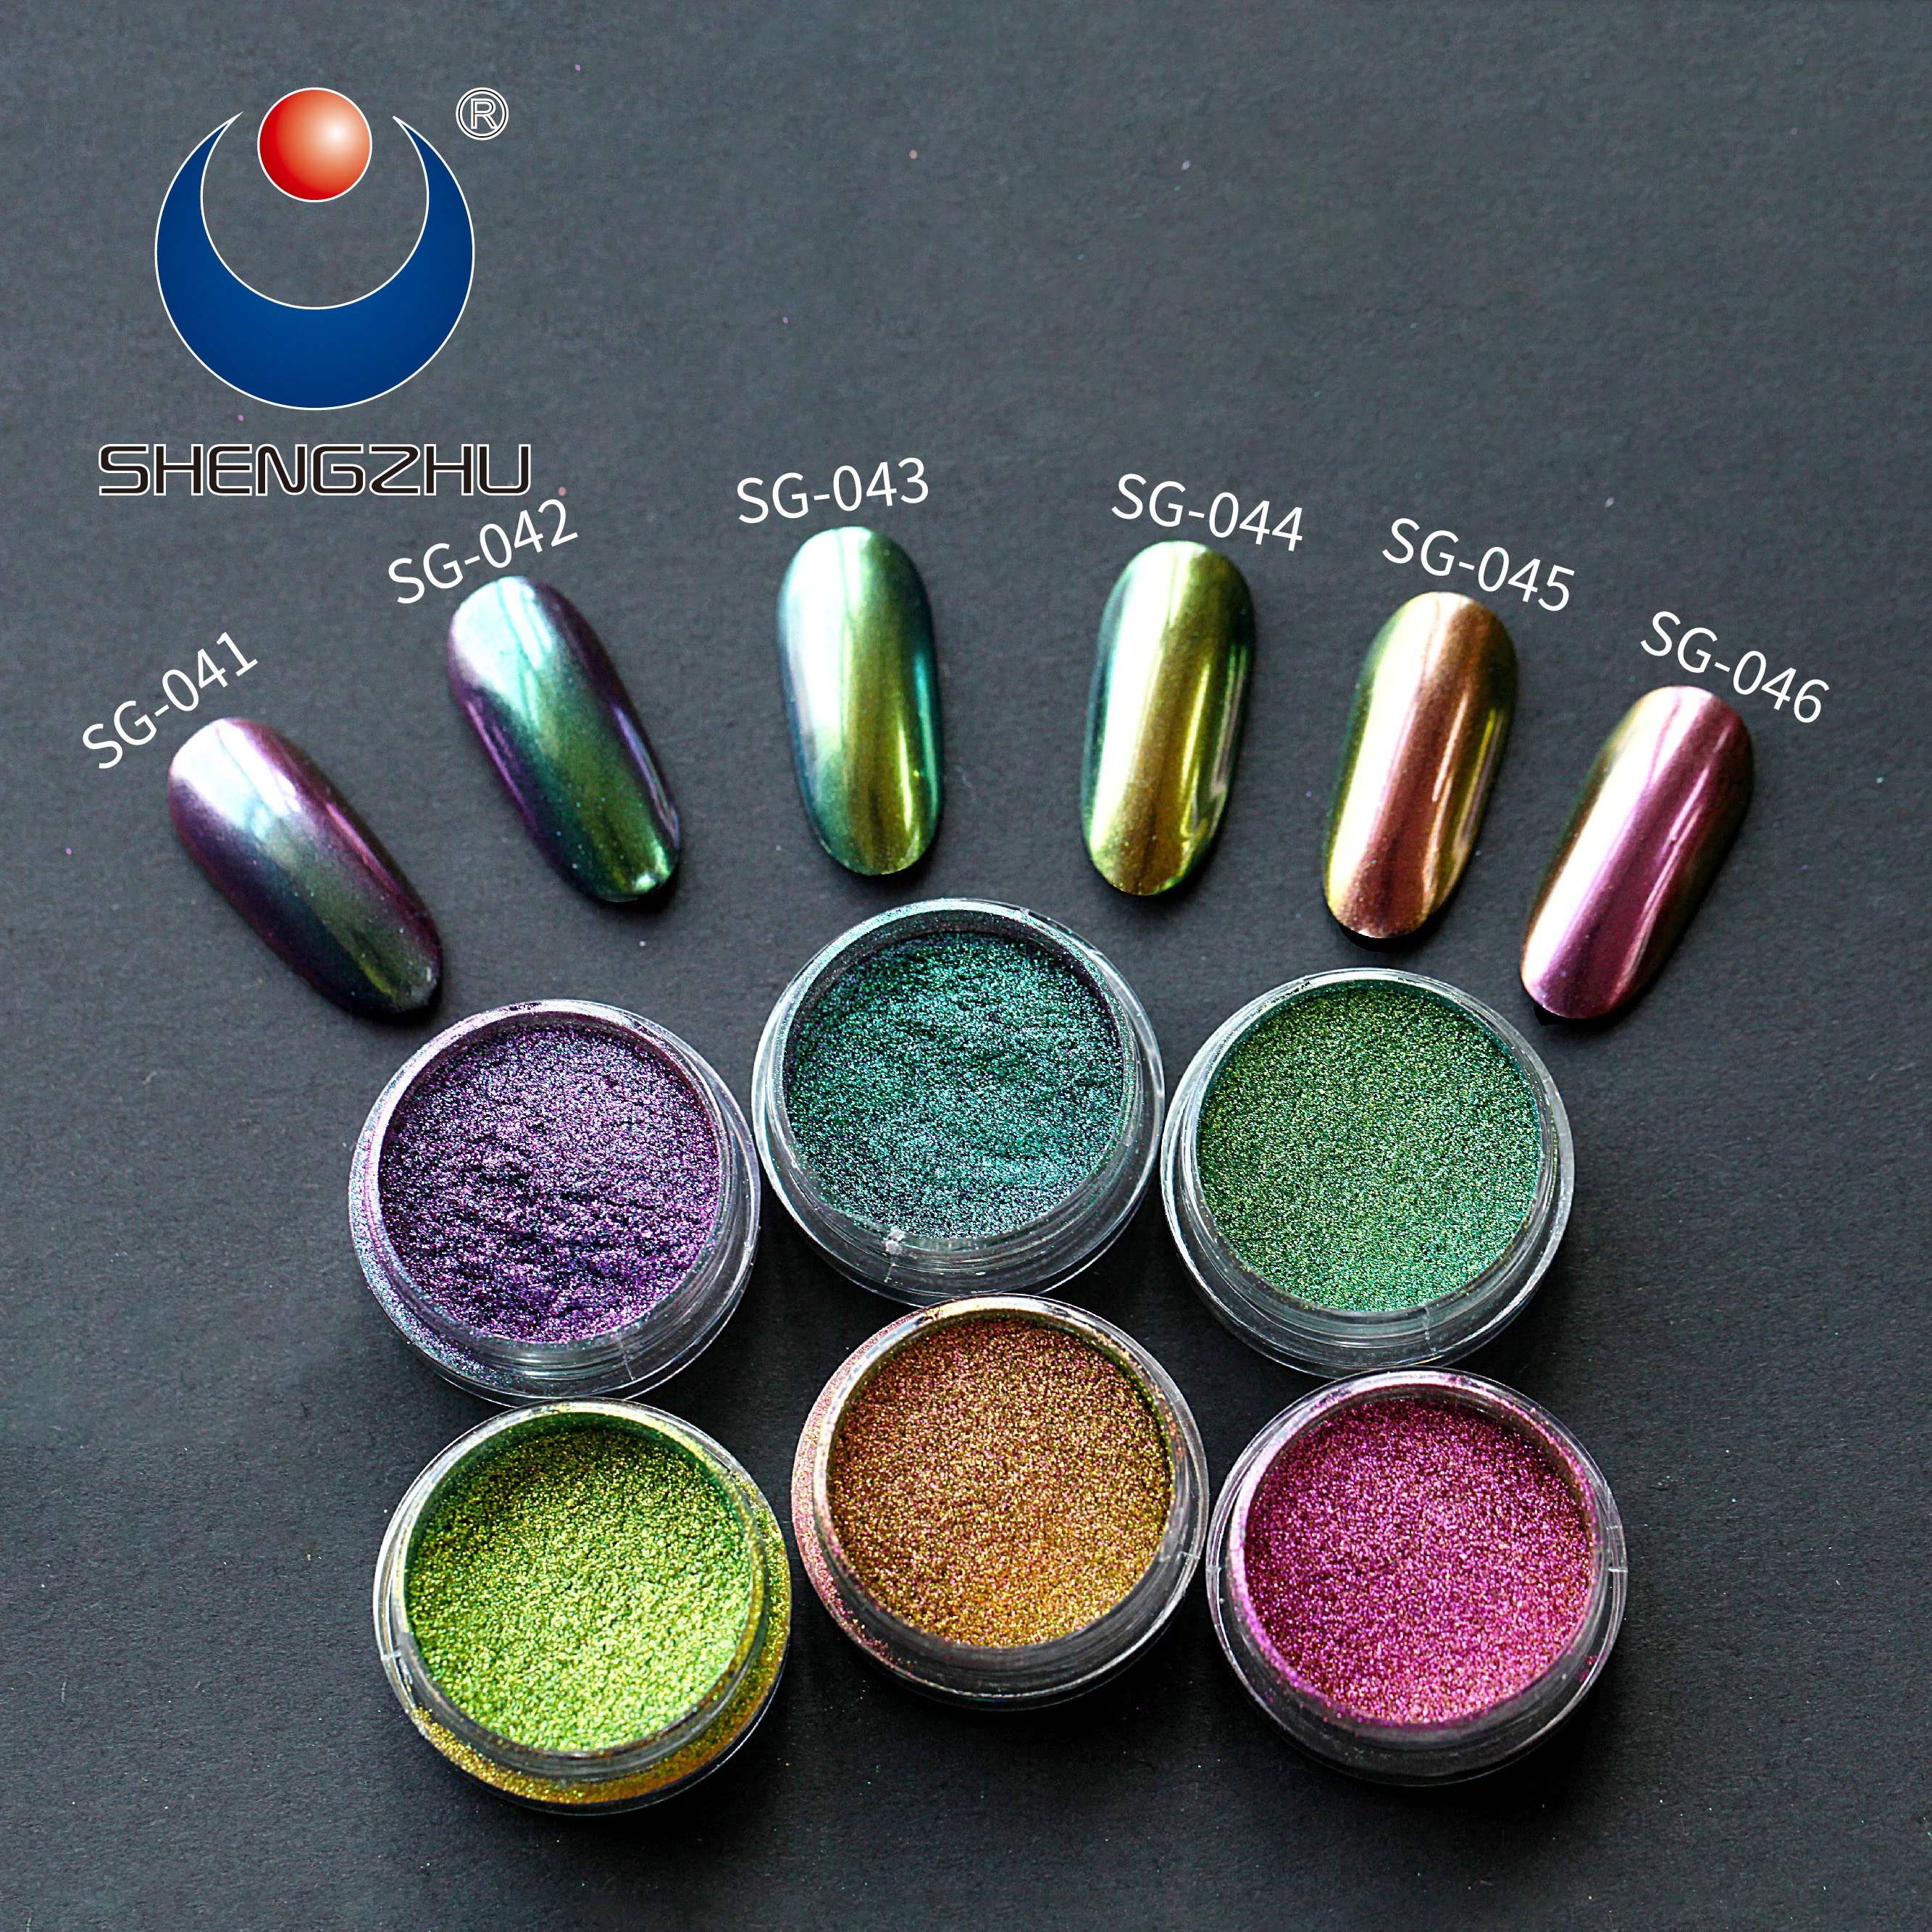 Shengzhu Loose Glitter Chameleon Pigment Micas Pigments Powder